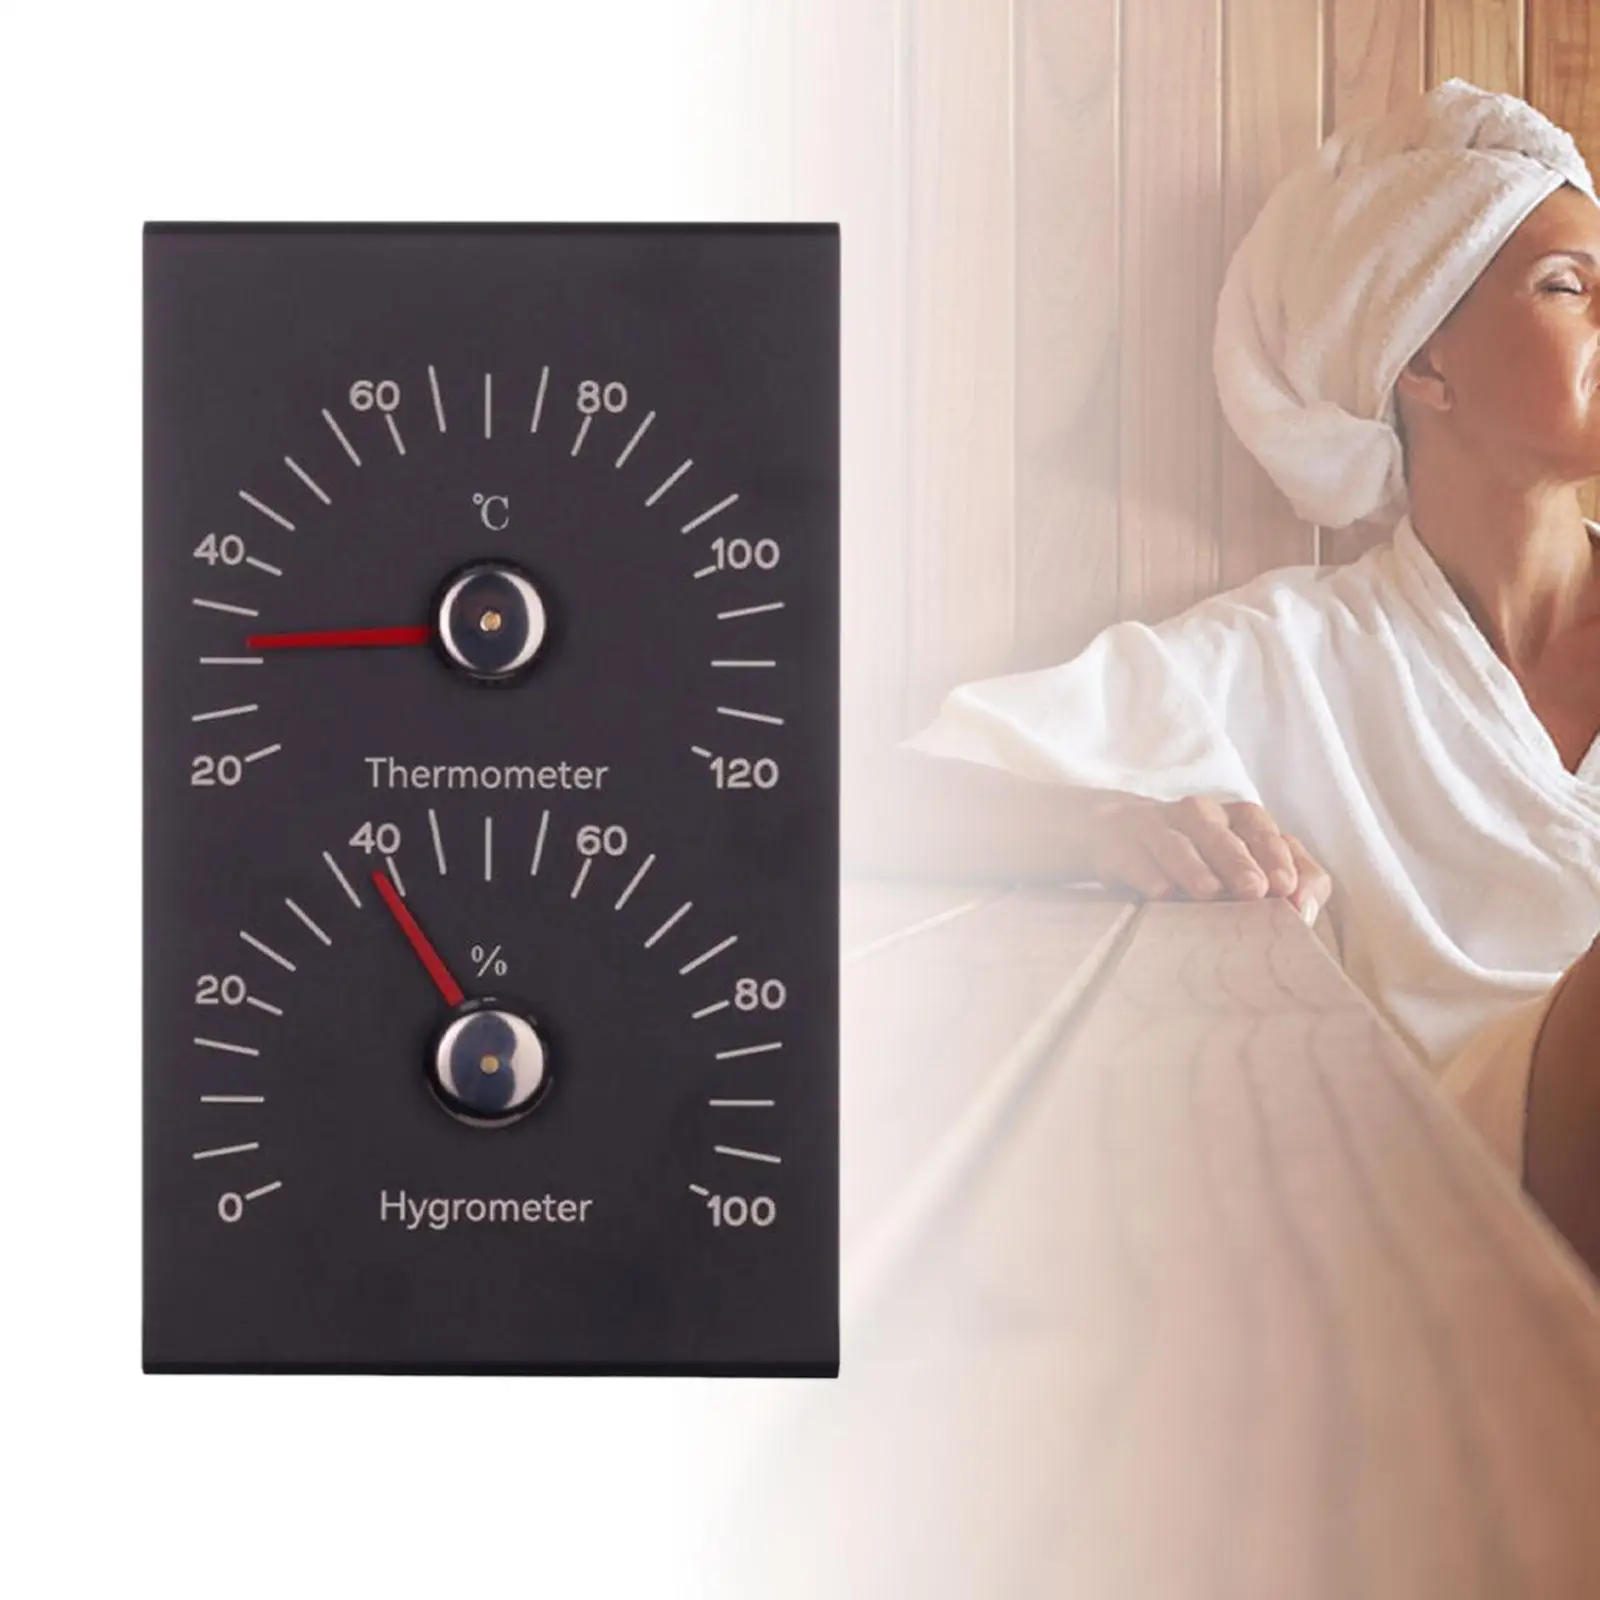 Sauna Temperature Hygrometer 2 in 1 Simple to Use Multifunction Monitor Gauge Moisture Temperature Measurement for Family Indoor